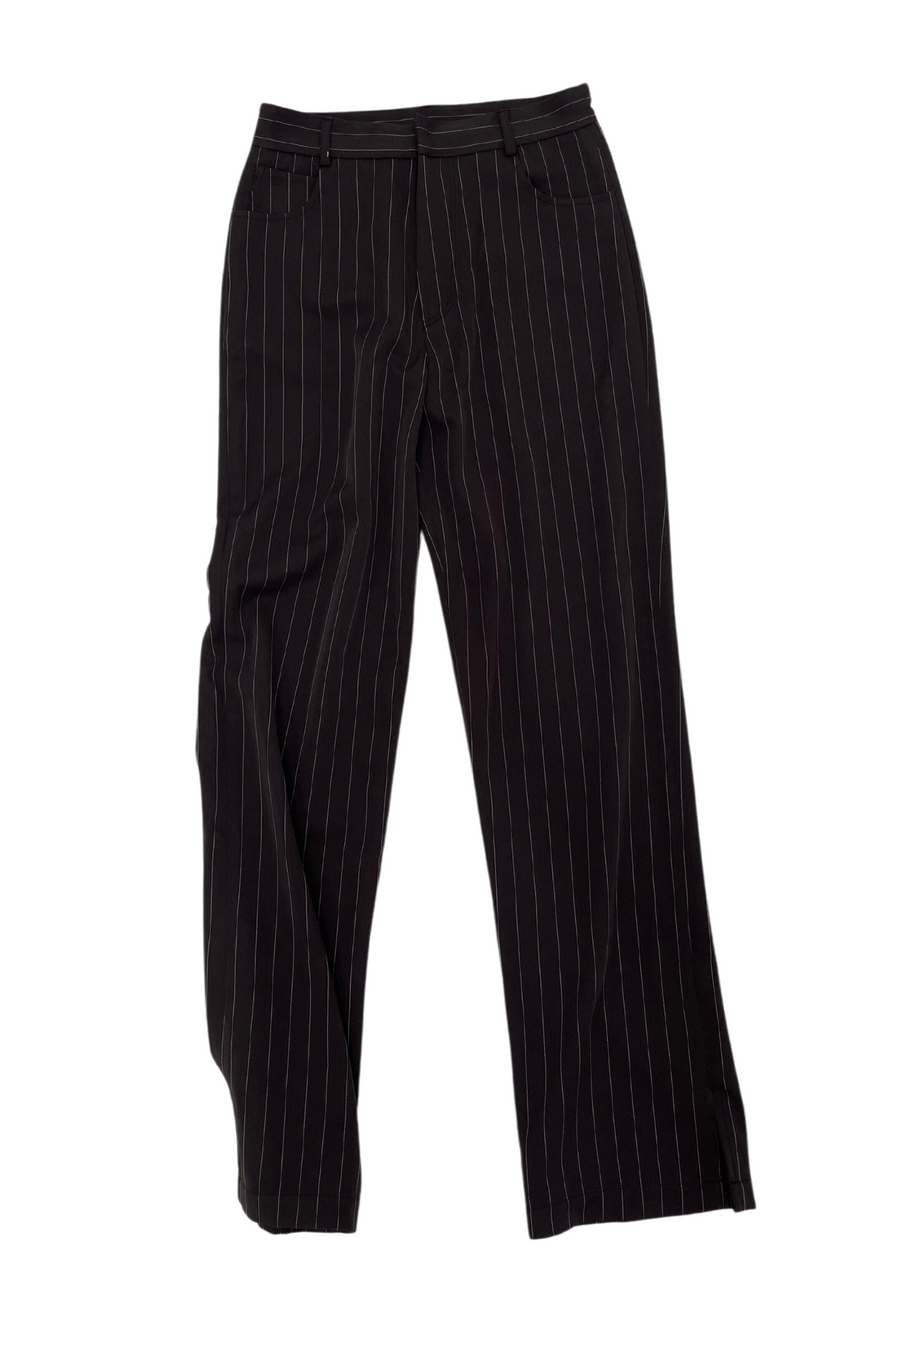 Brown Pinstripe Trousers - Brown